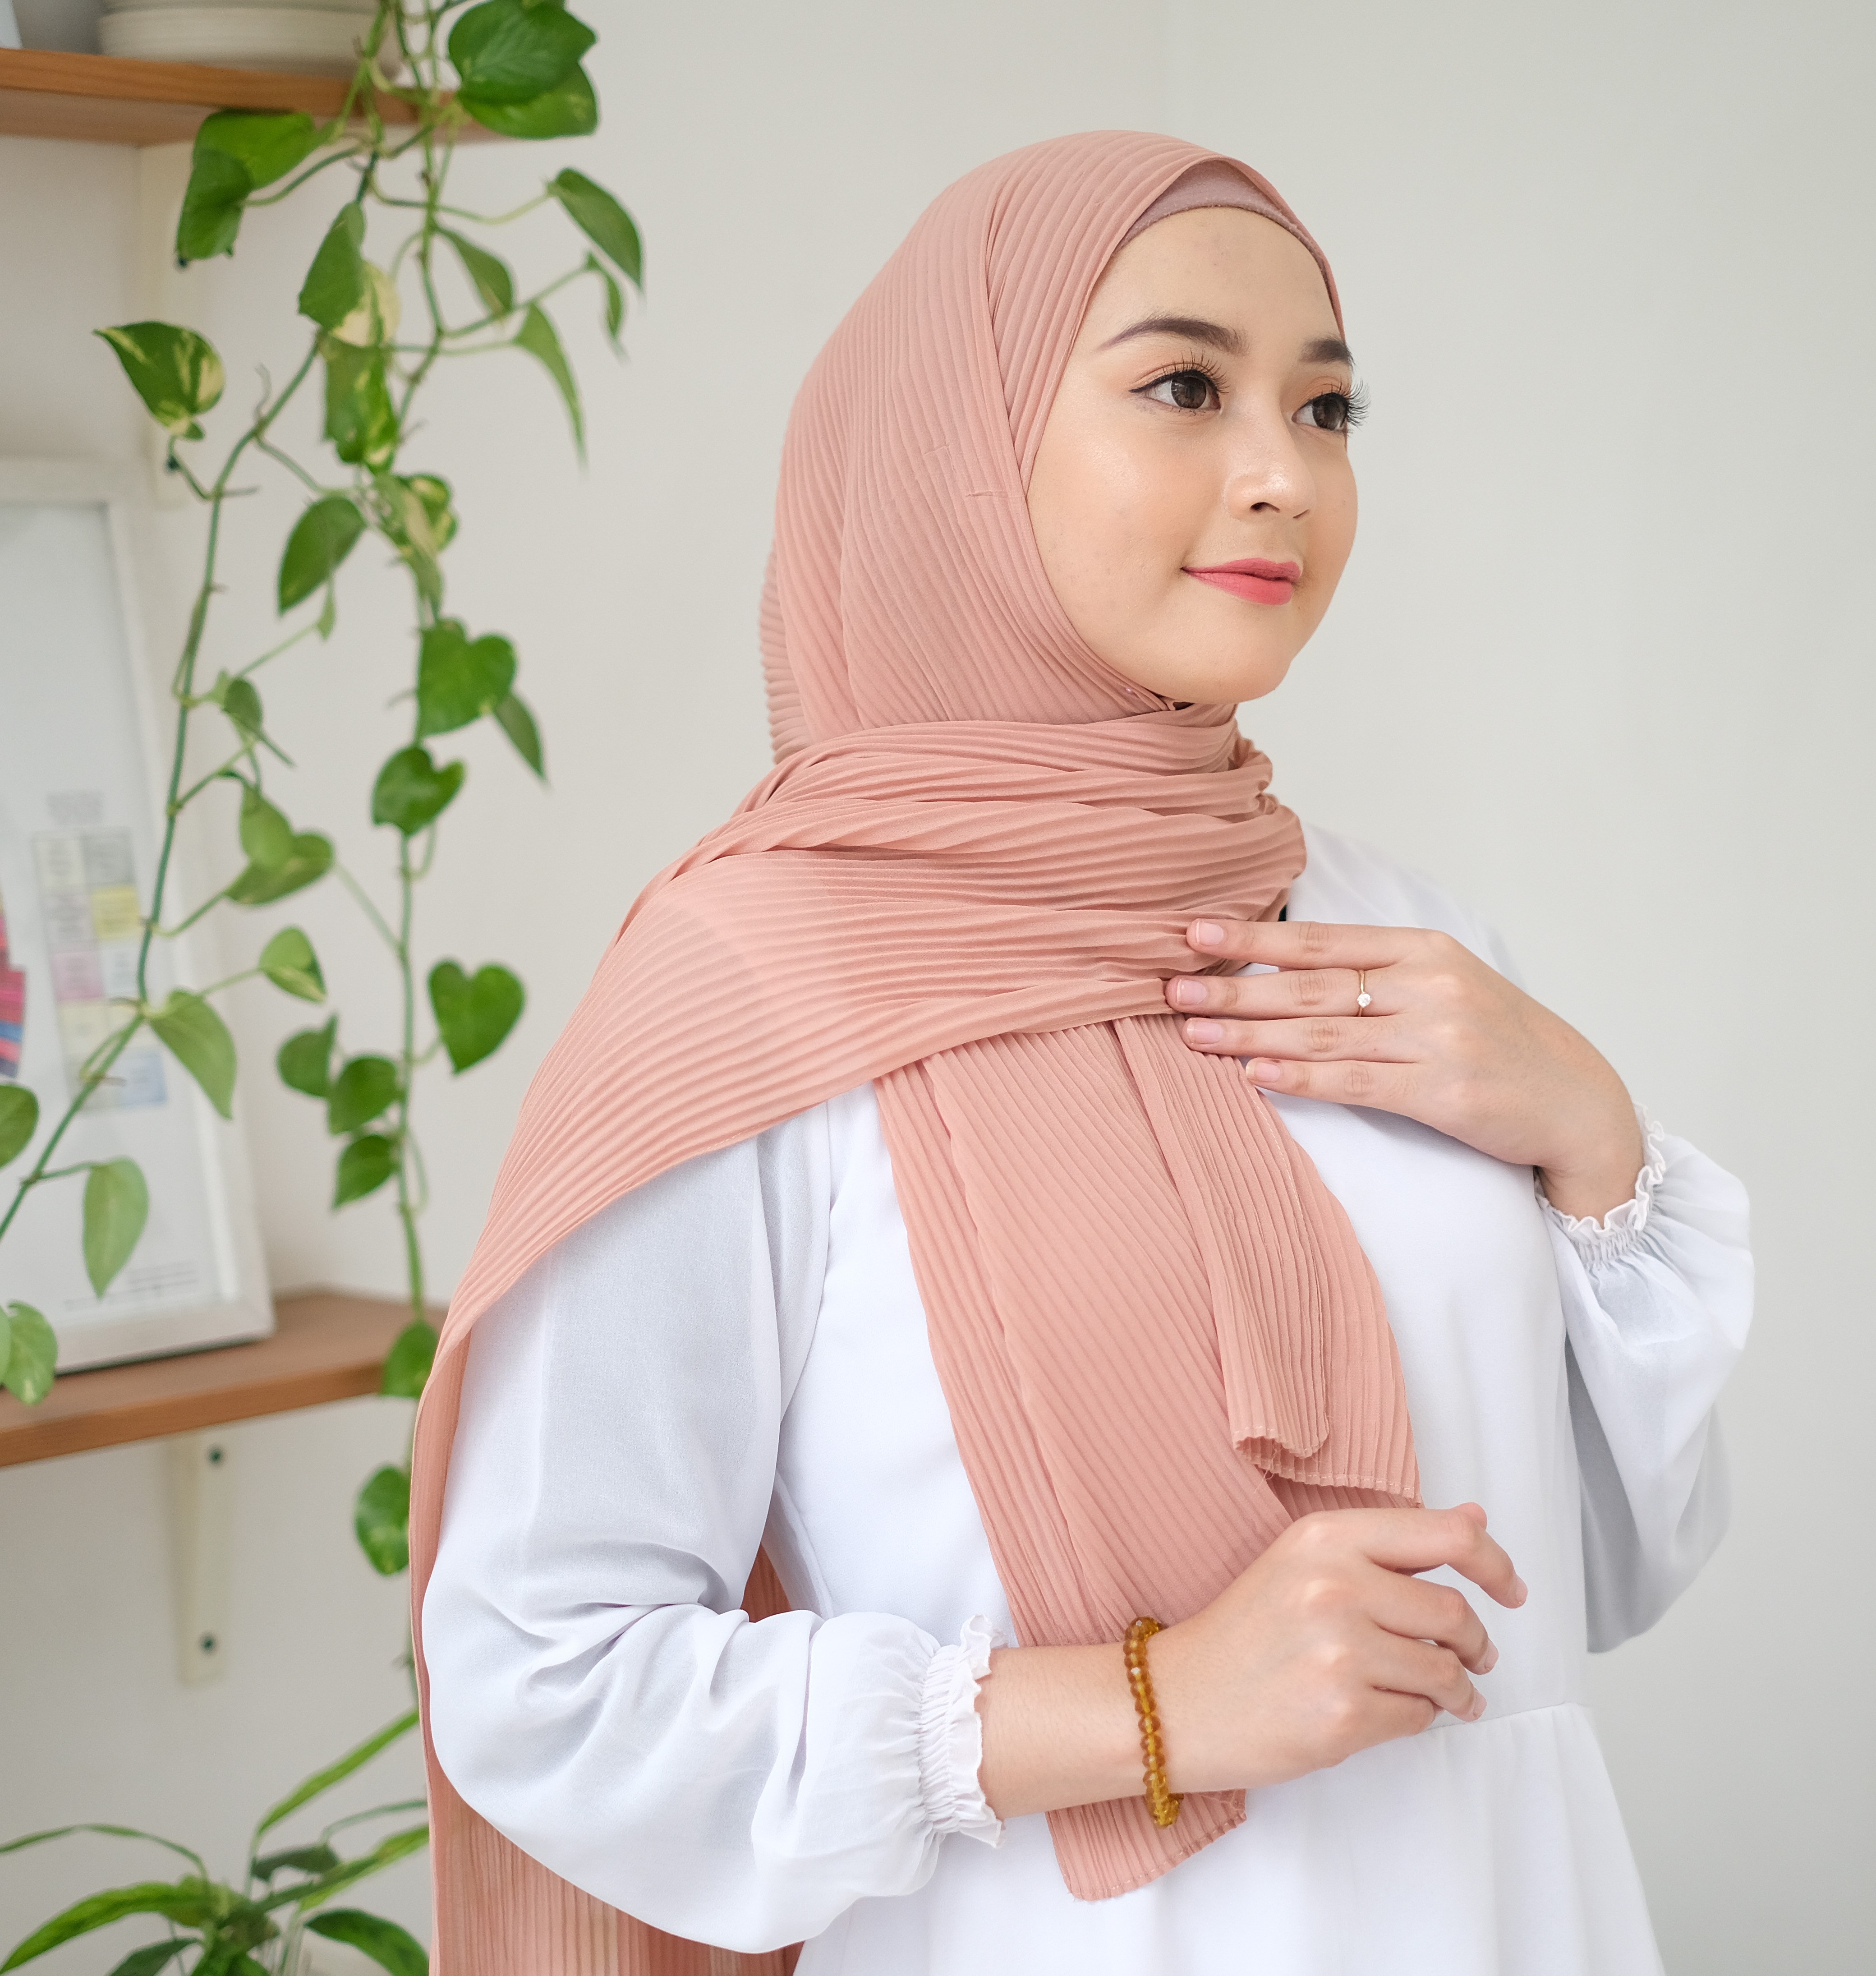 Jilbab plisket warna cream